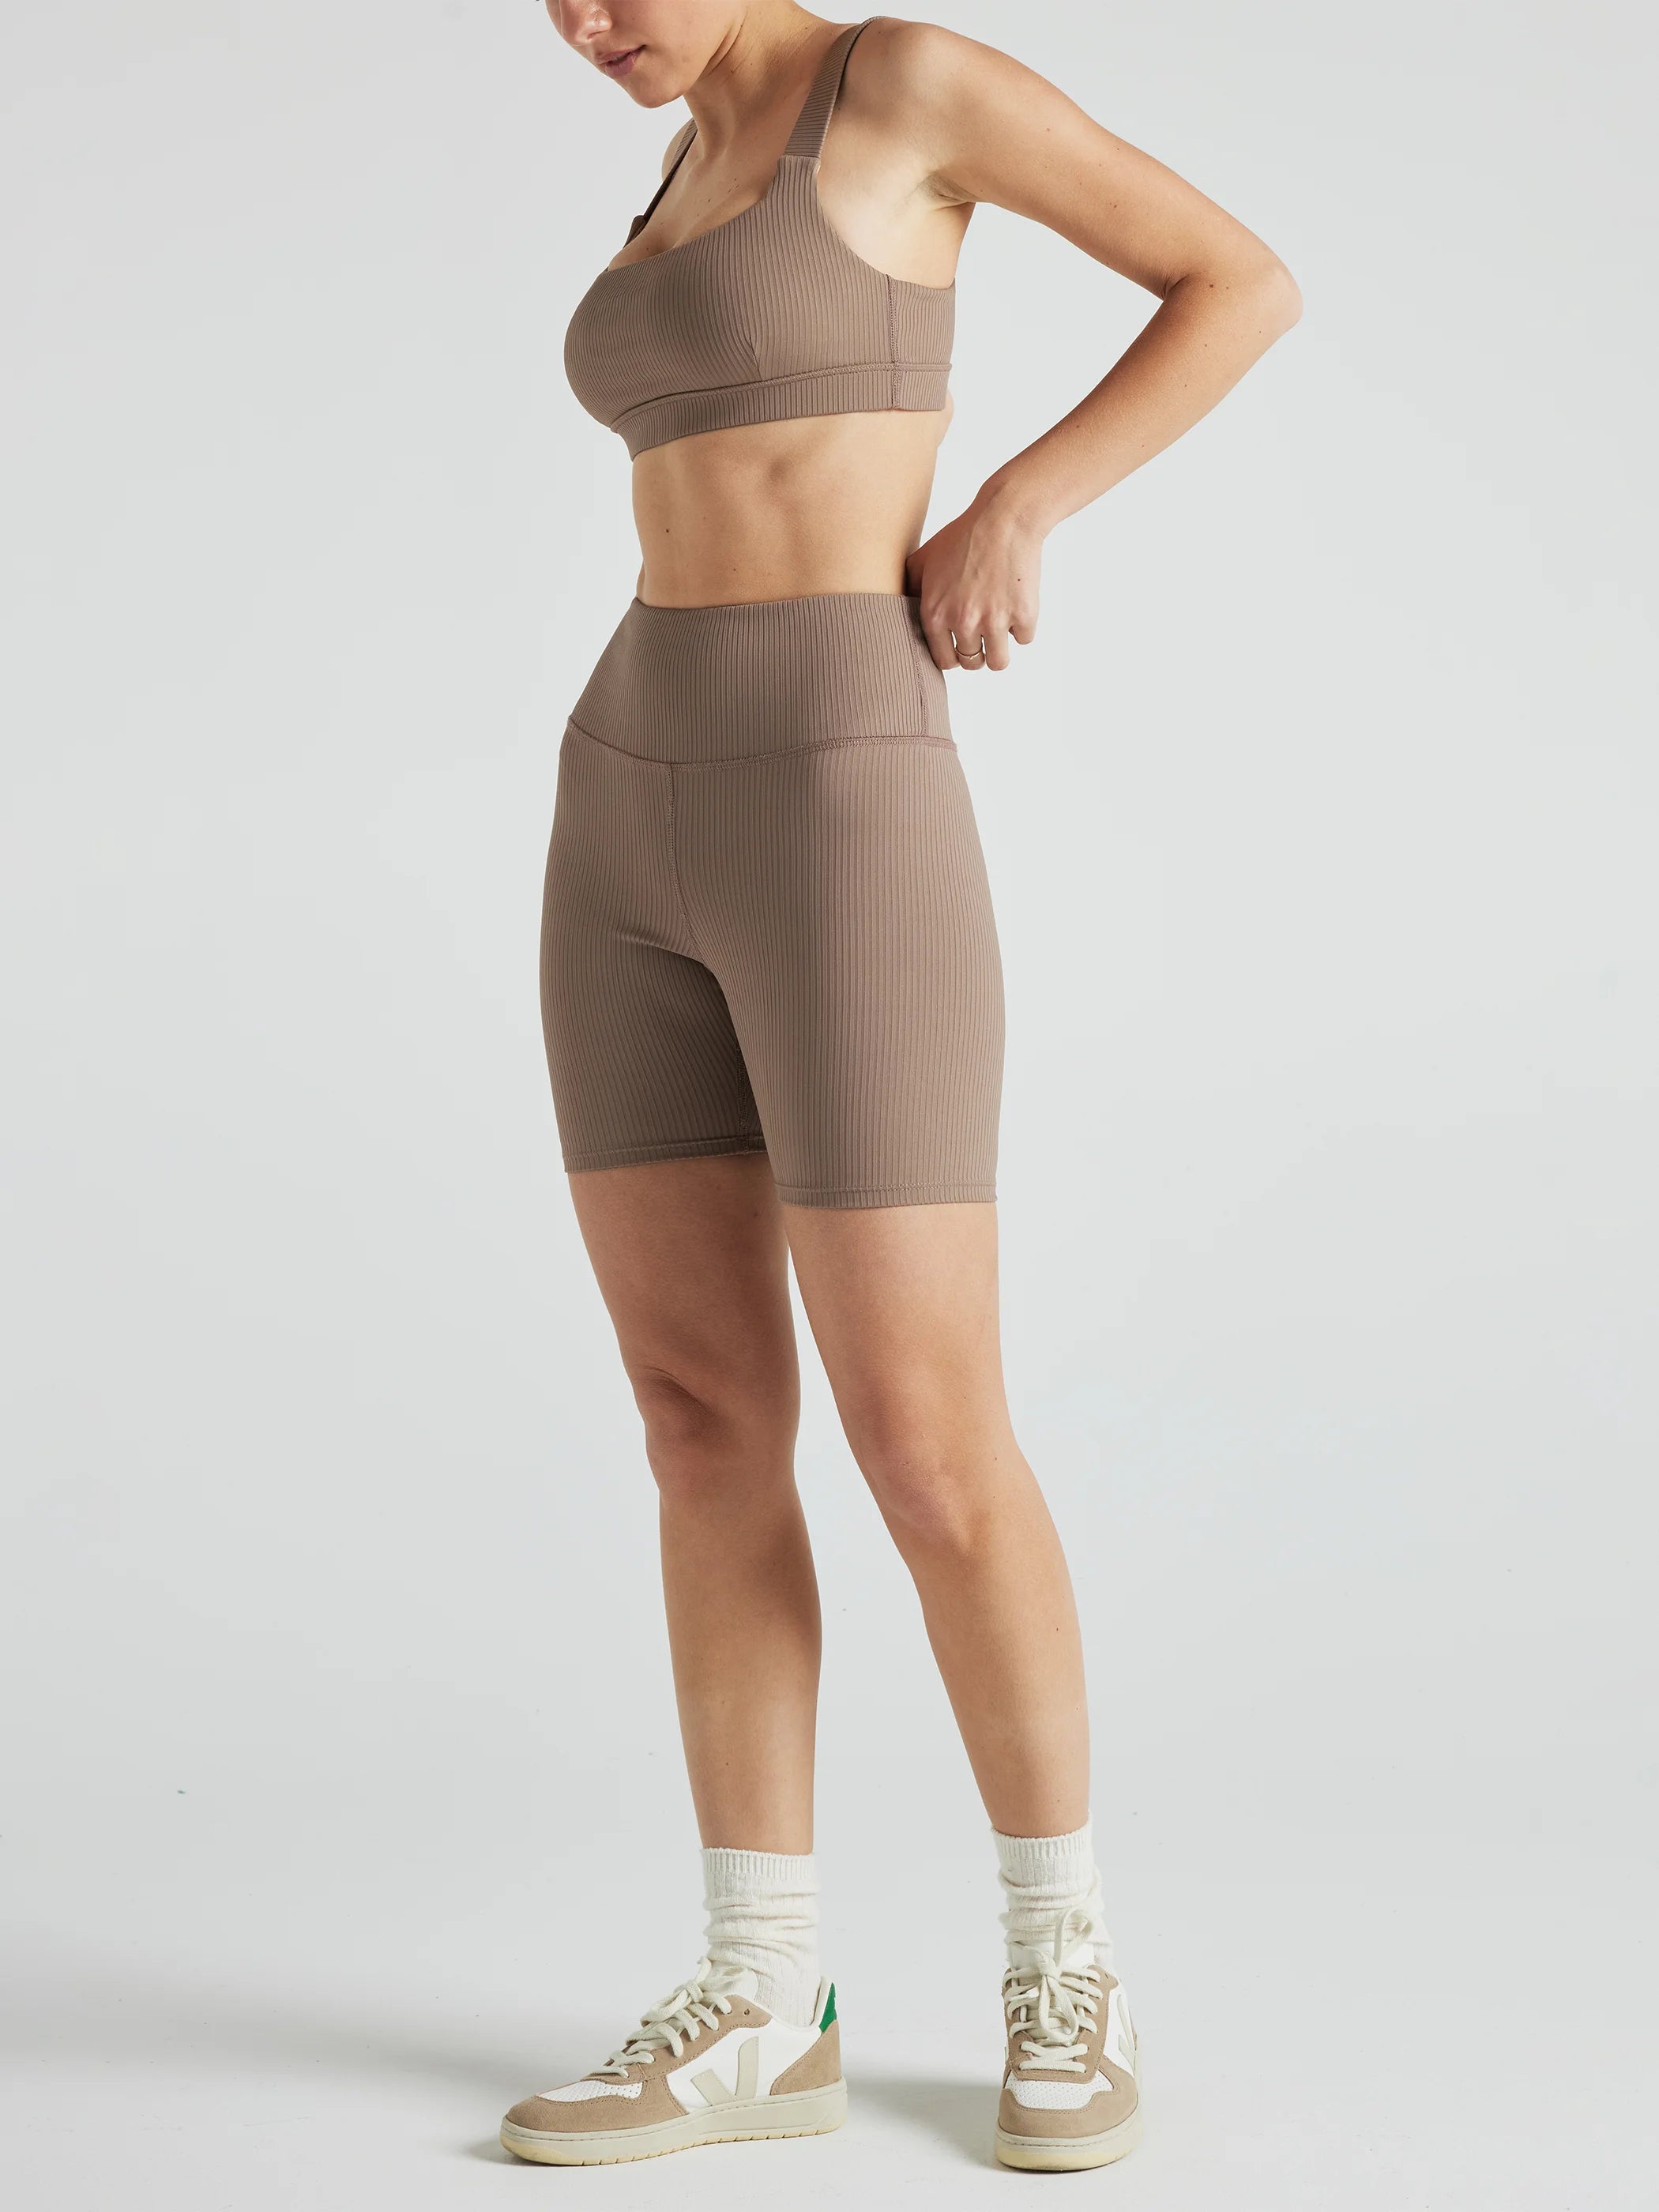 Model wears sustainable square neck light brown nylon rib sports bra